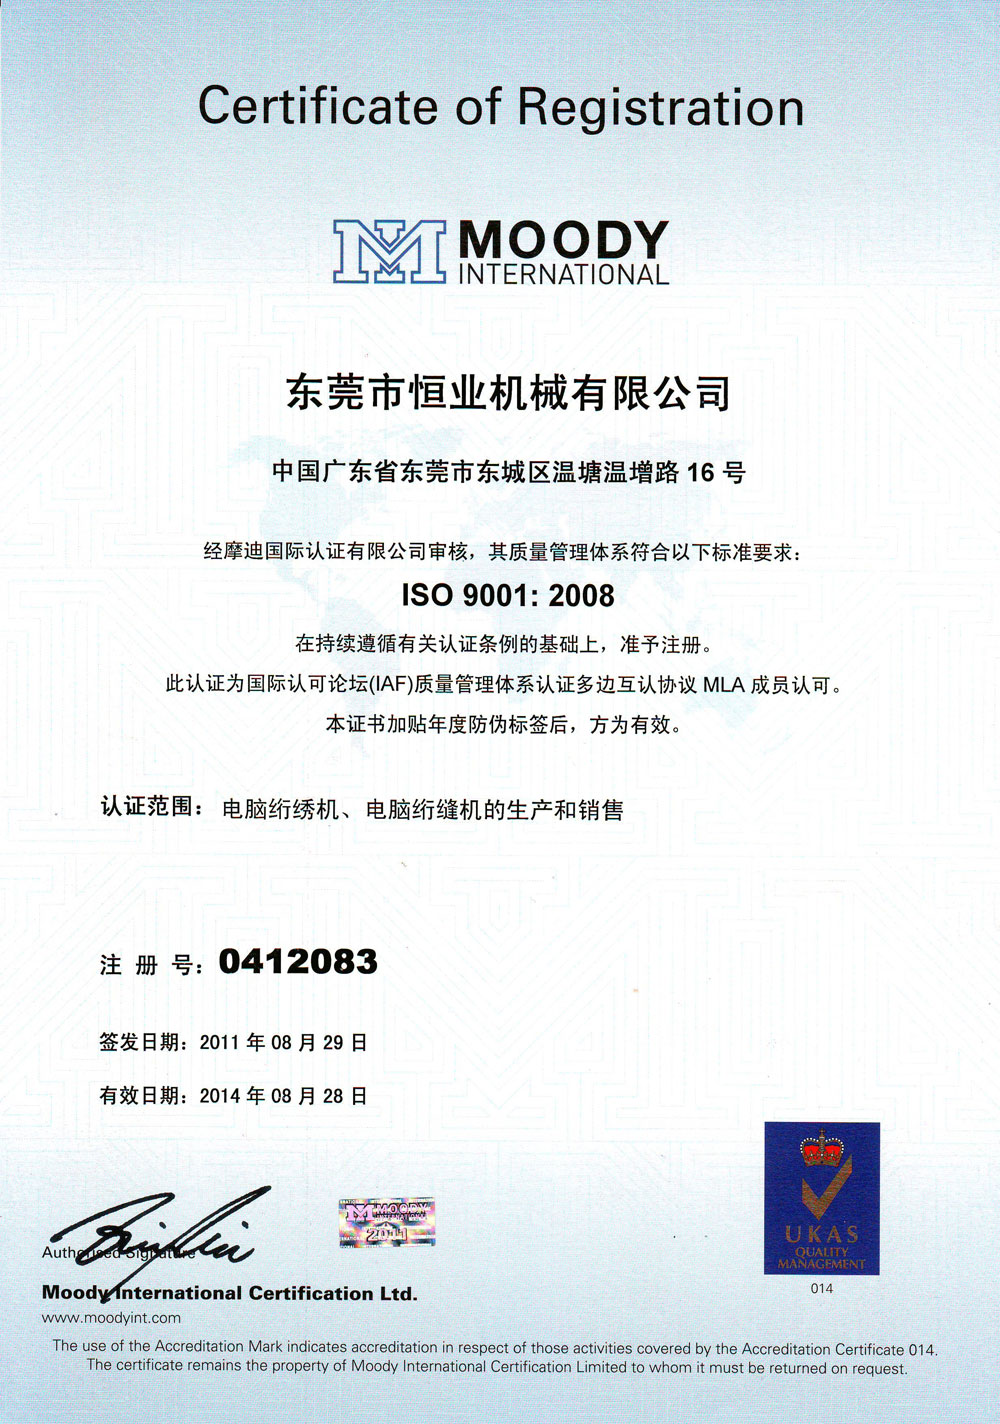 ISO9001:2000Certificate No. No:0412083